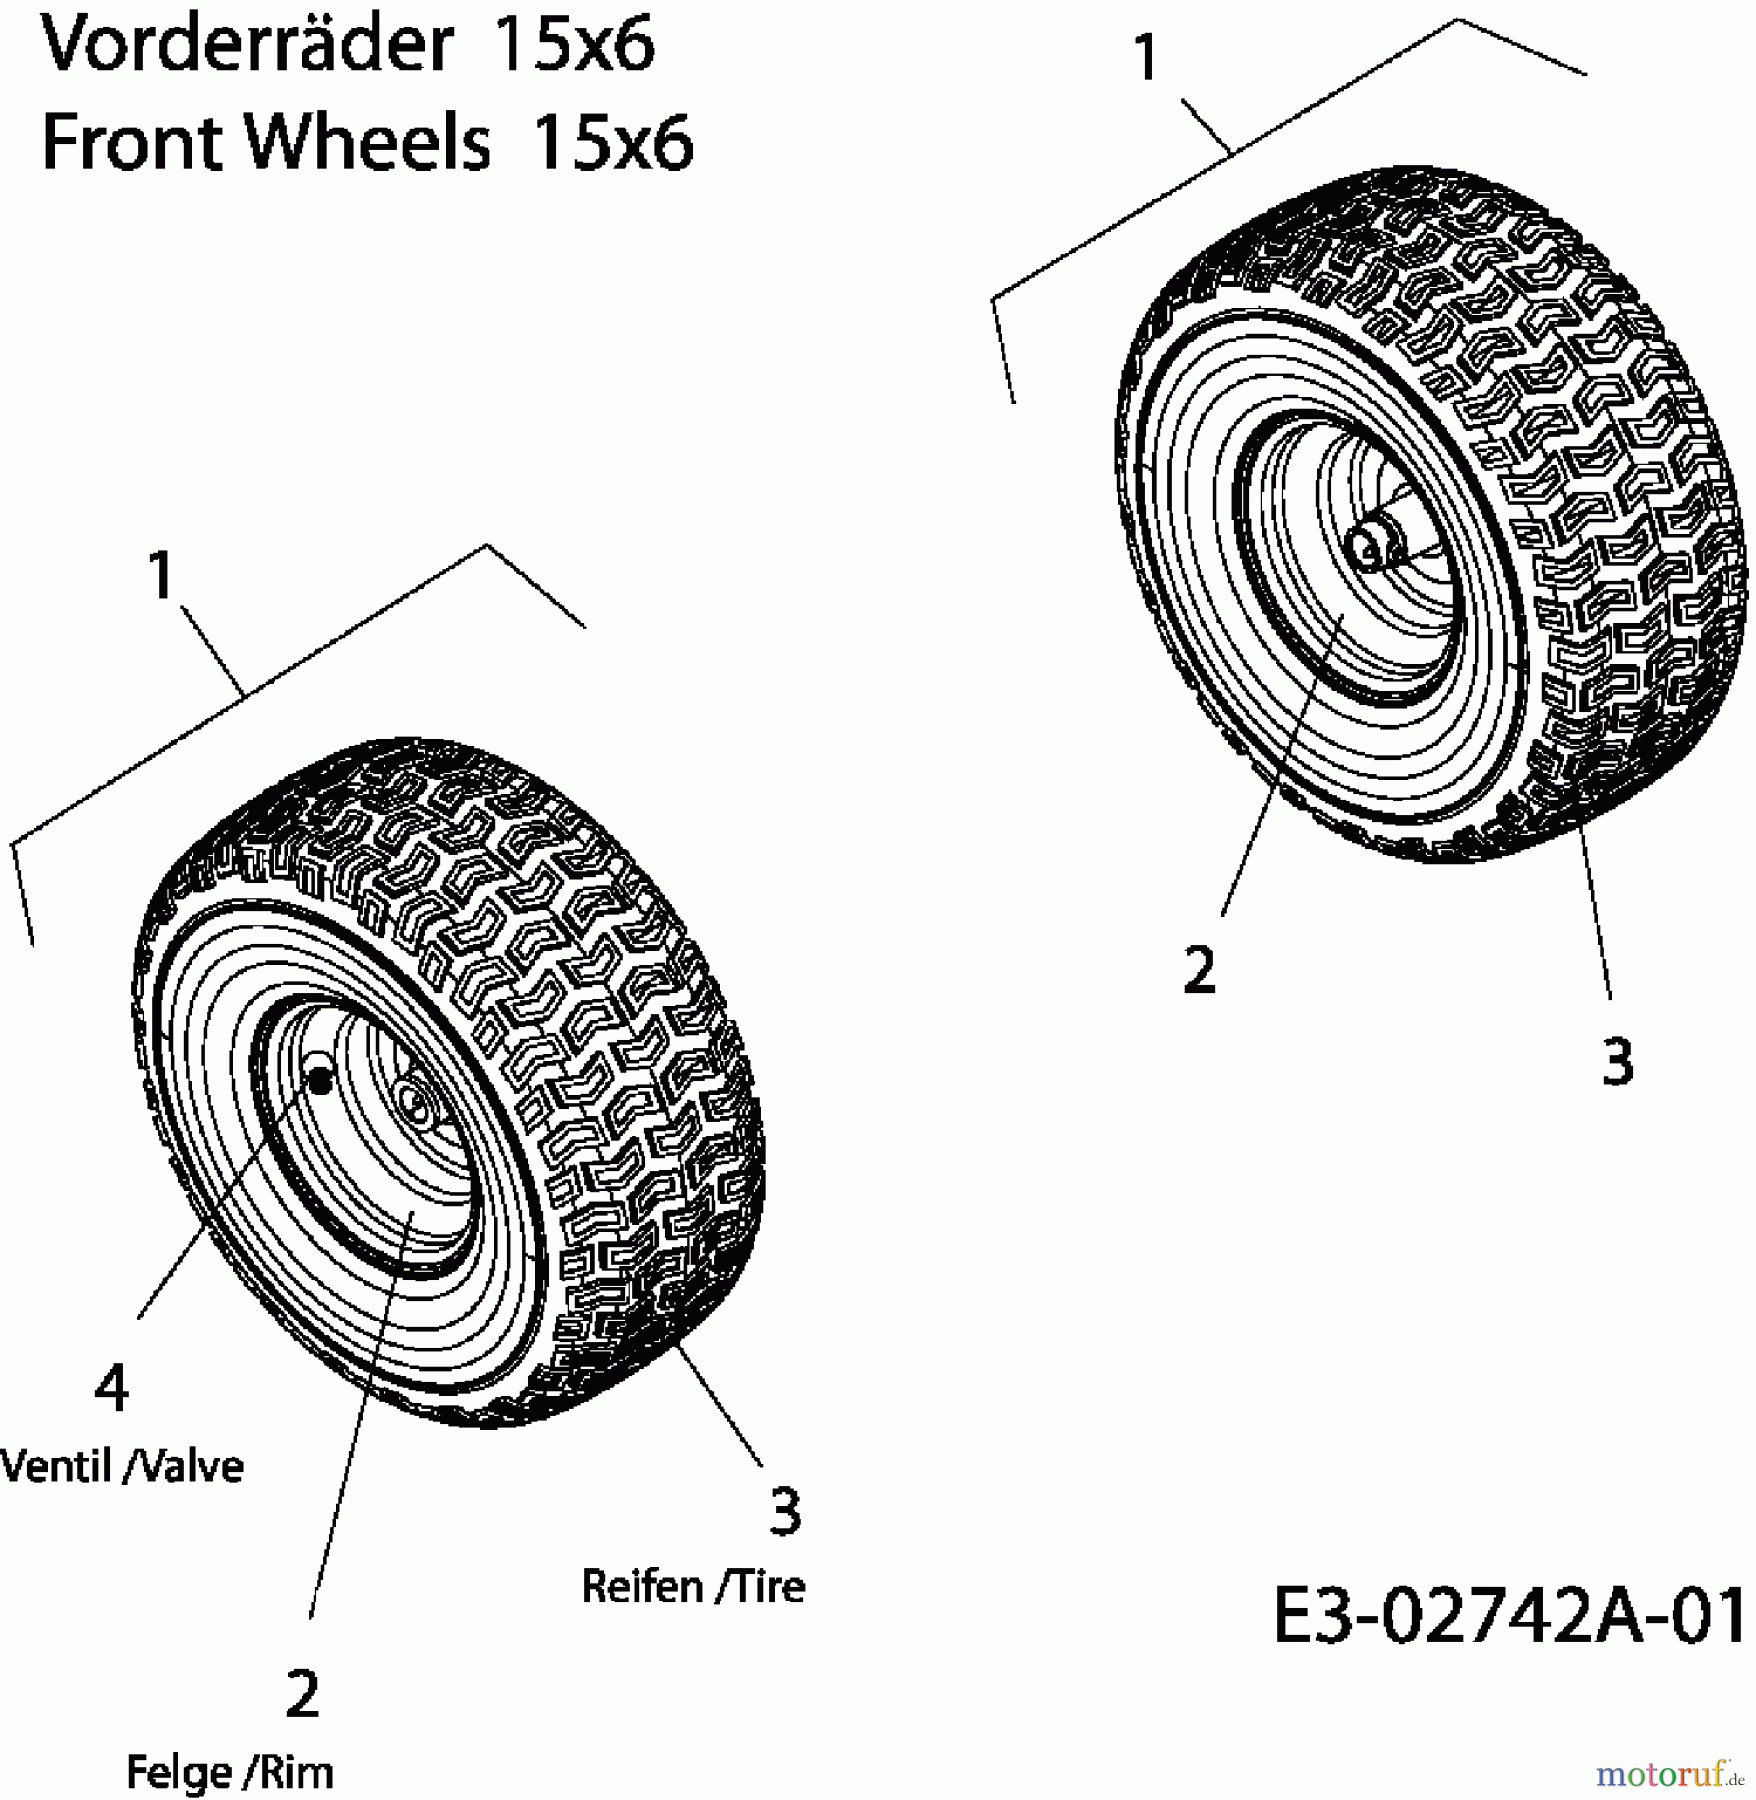  MTD Lawn tractors RS 125/96 13A1762F600  (2006) Front wheels 15x6